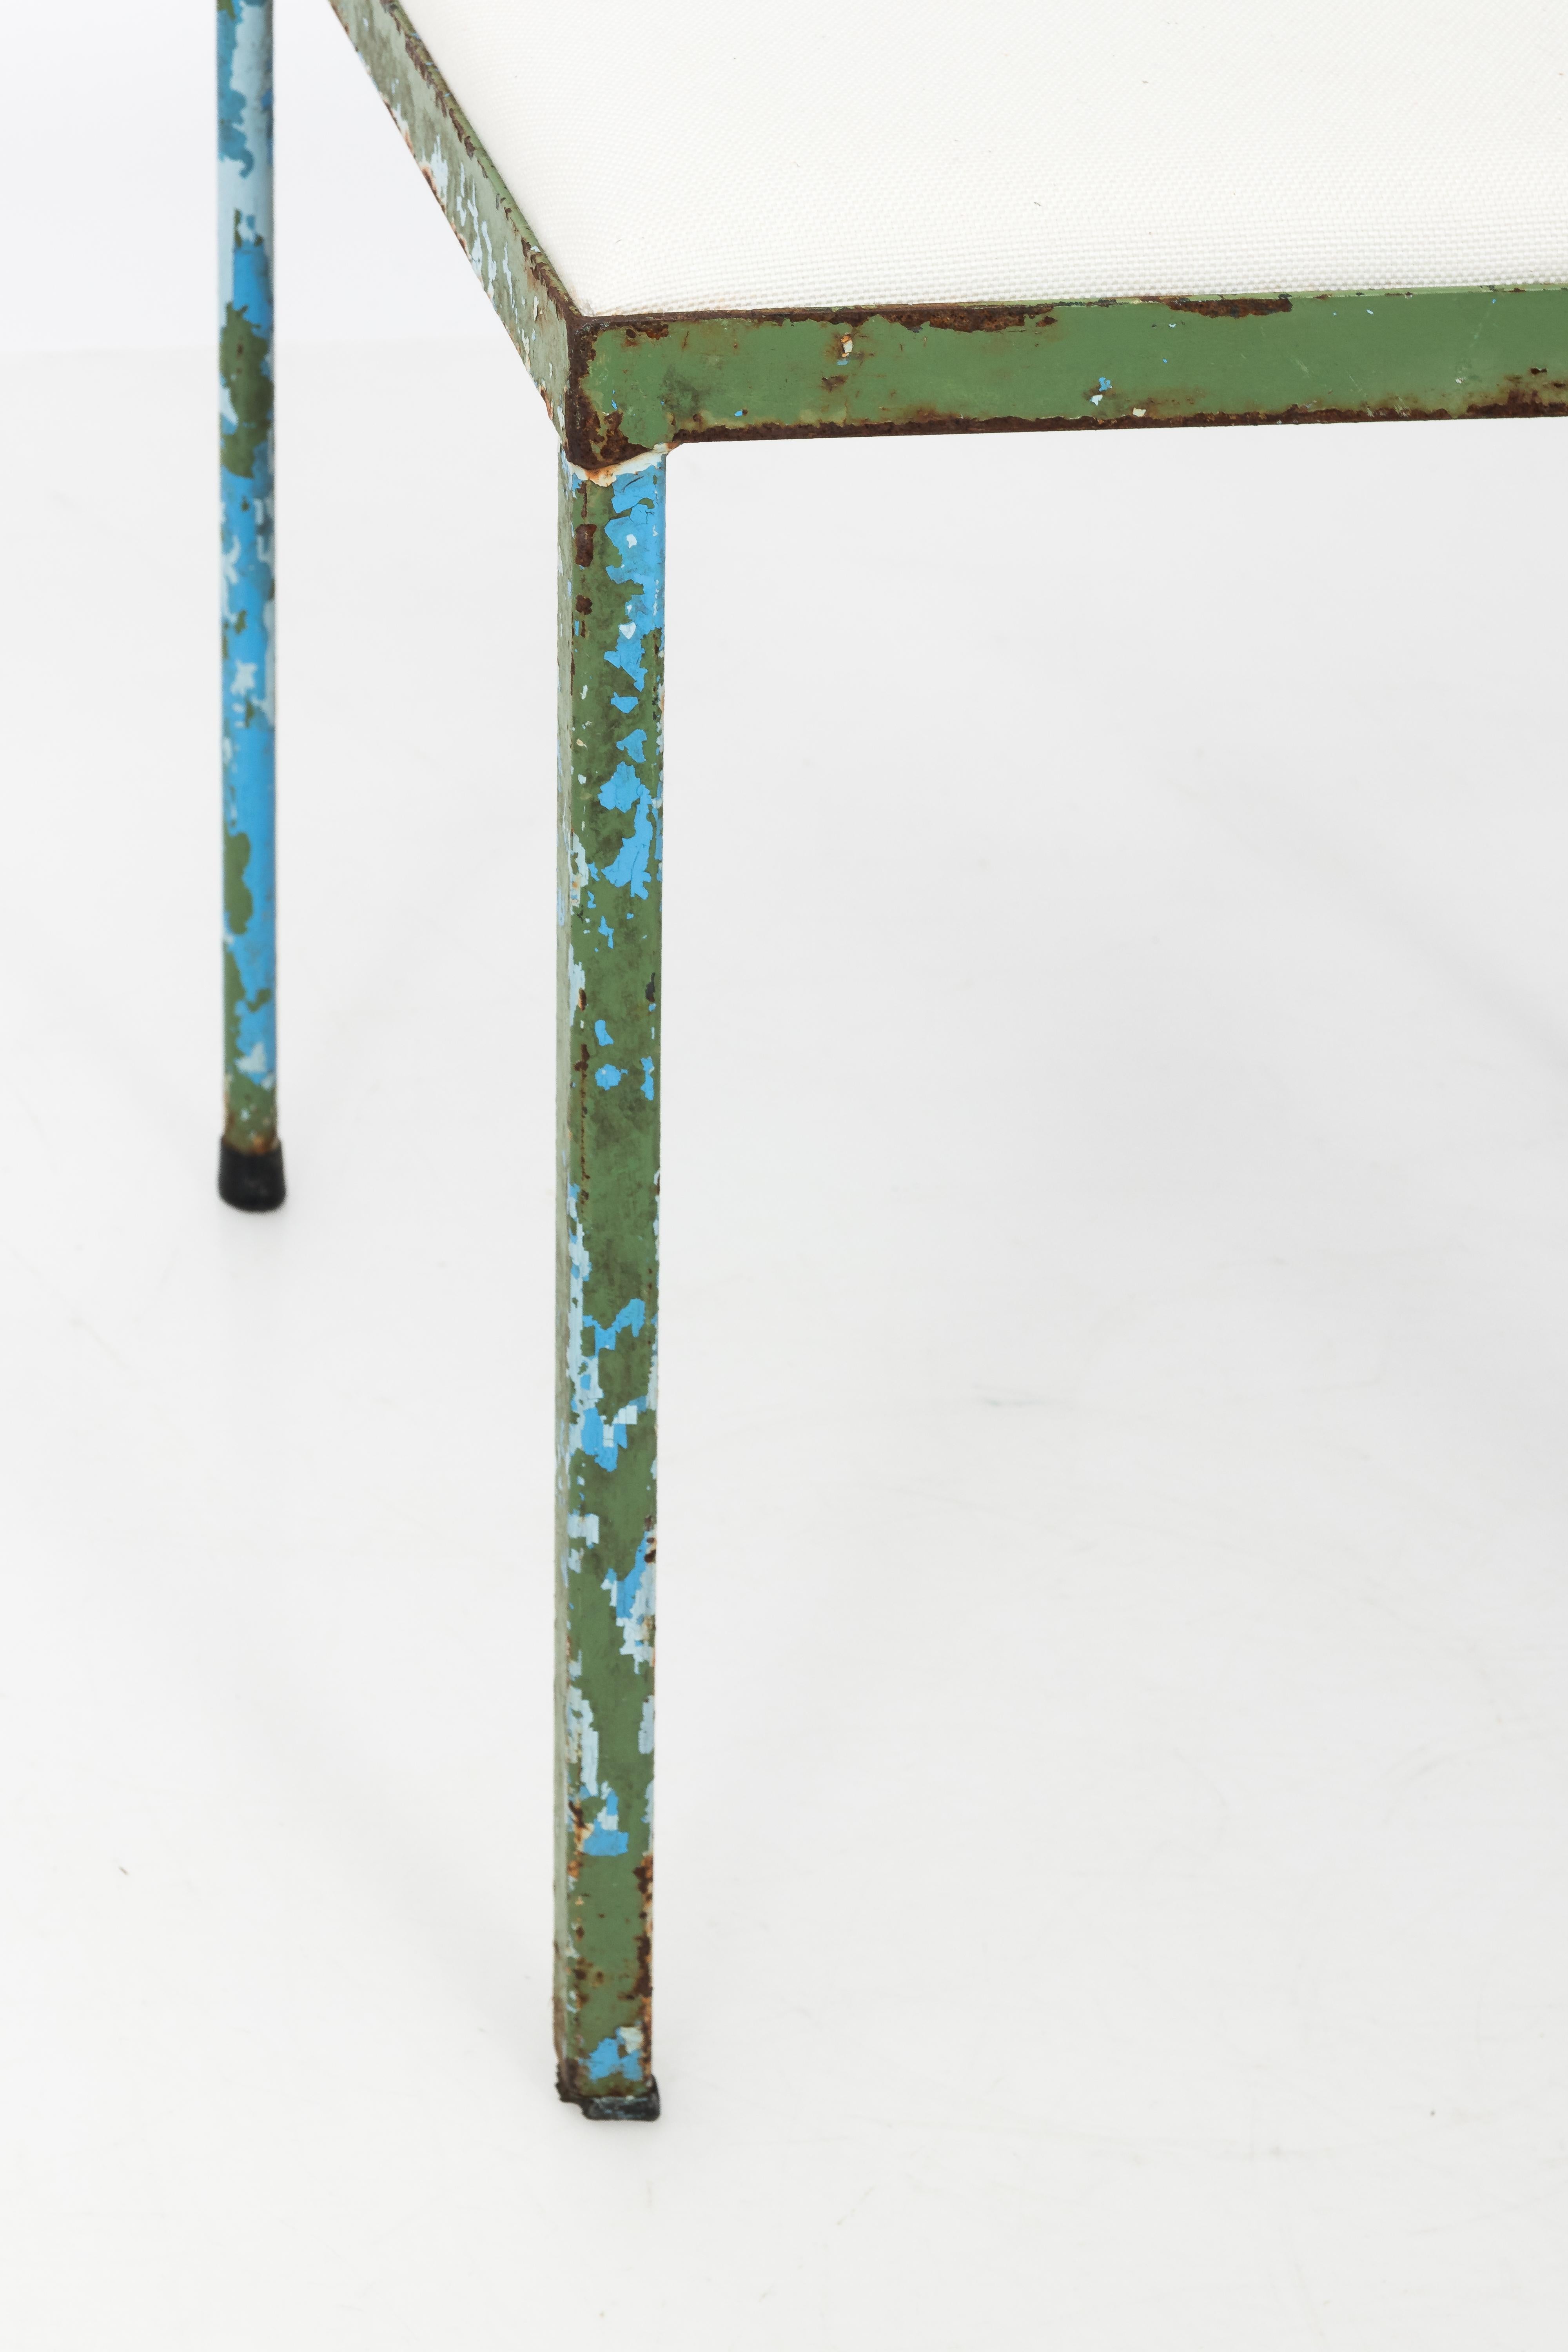 Industrial Luigi Serafini Style Scroll Back Suspiral Chairs for Garden